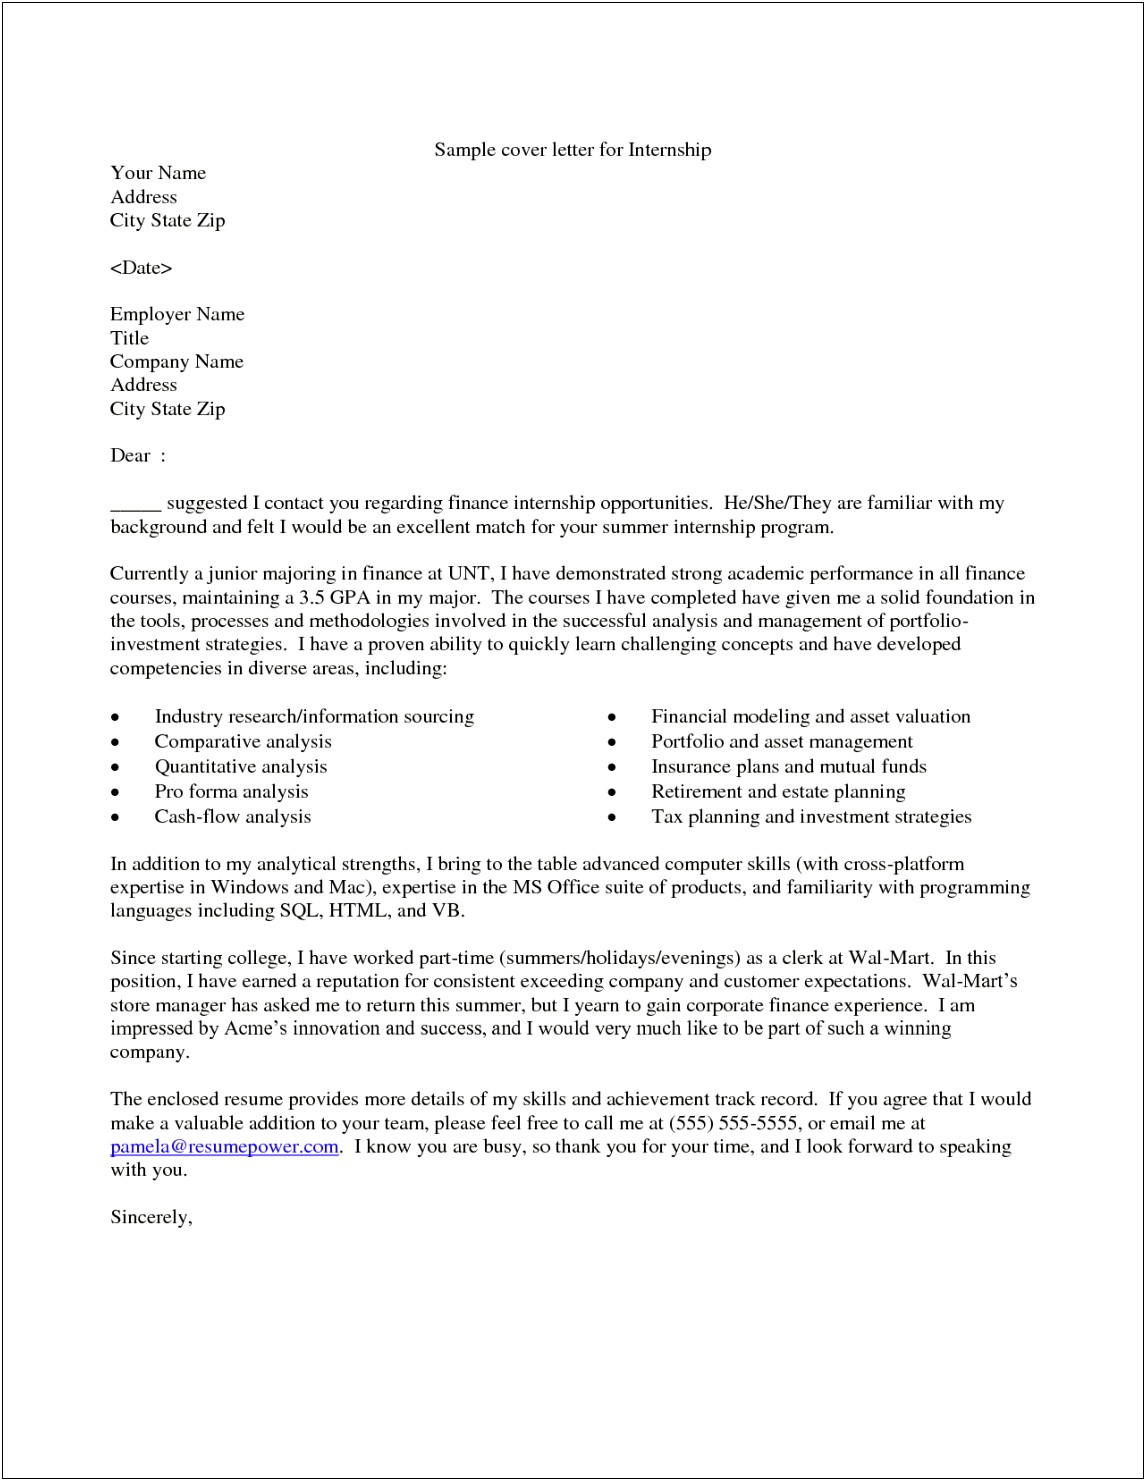 Resume Cover Letter For Intern Position